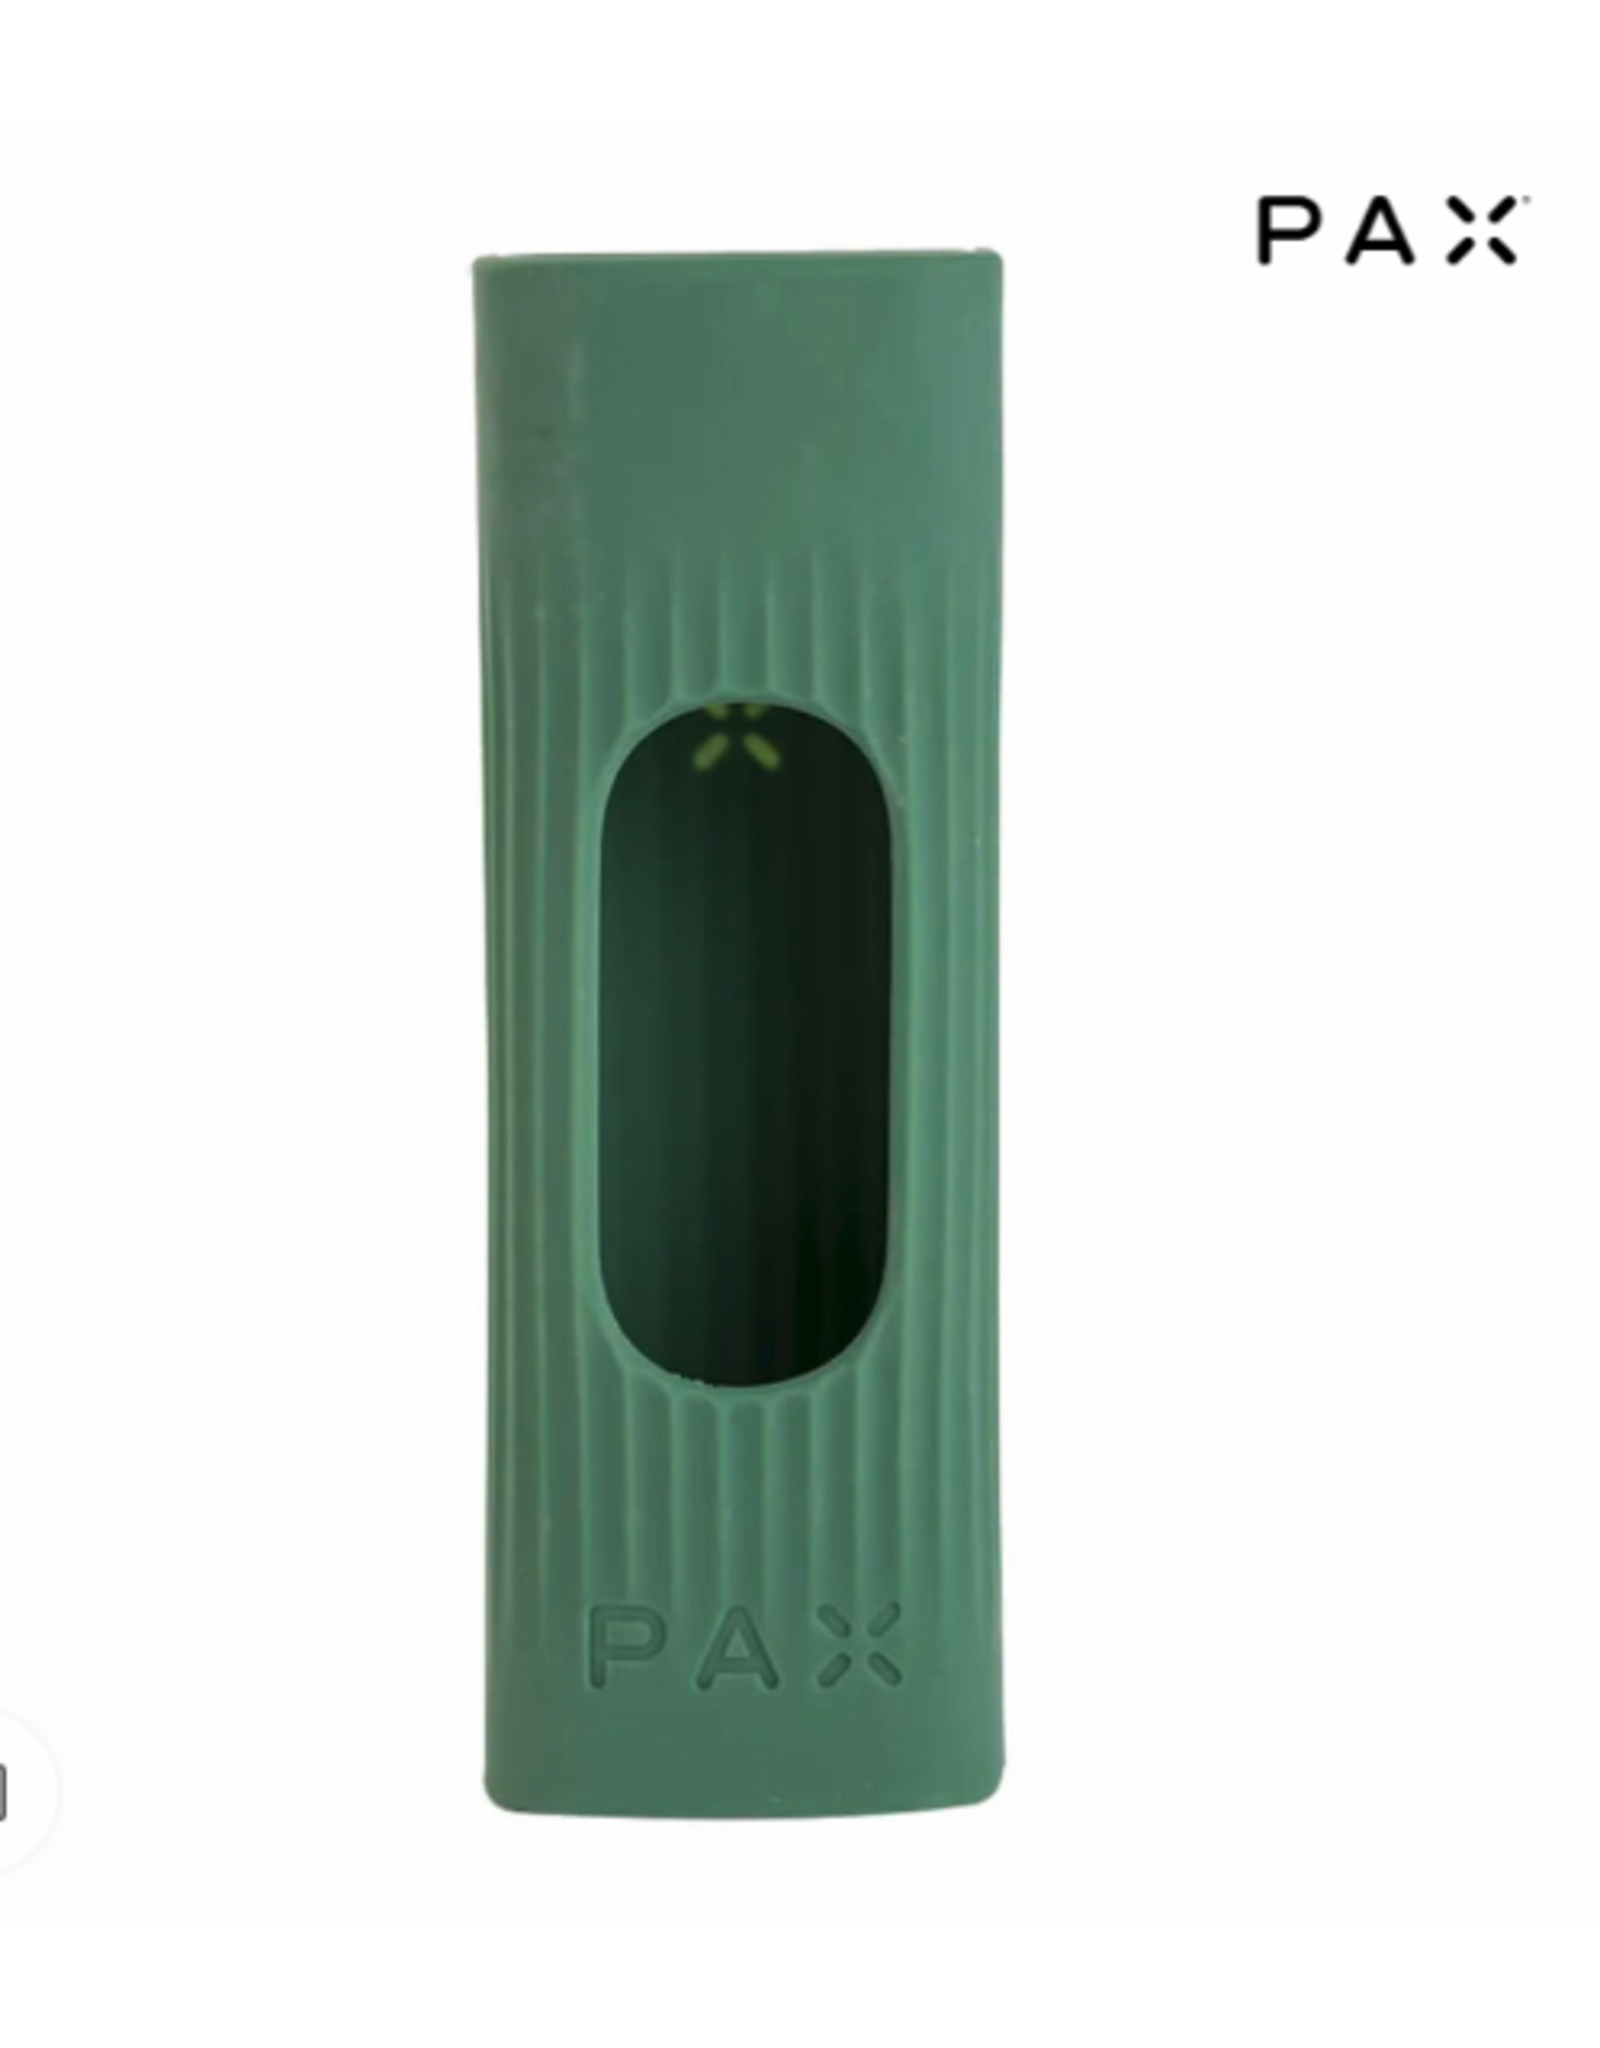 PAX Pax silicone grip sleeve